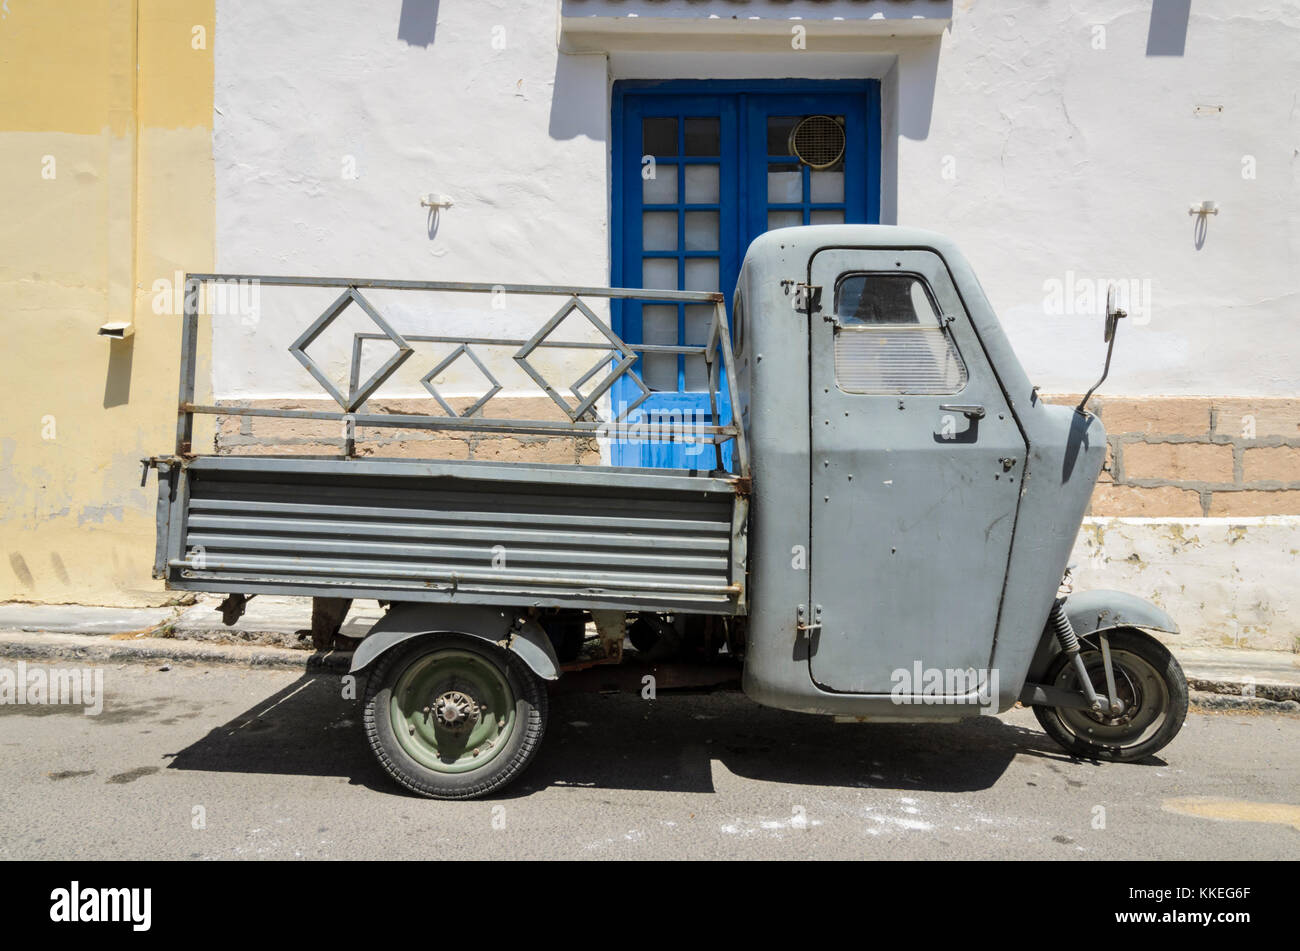 old-three-wheeled-utility-vehicle-truck-on-the-island-of-aegina-greece-KKEG6F.jpg